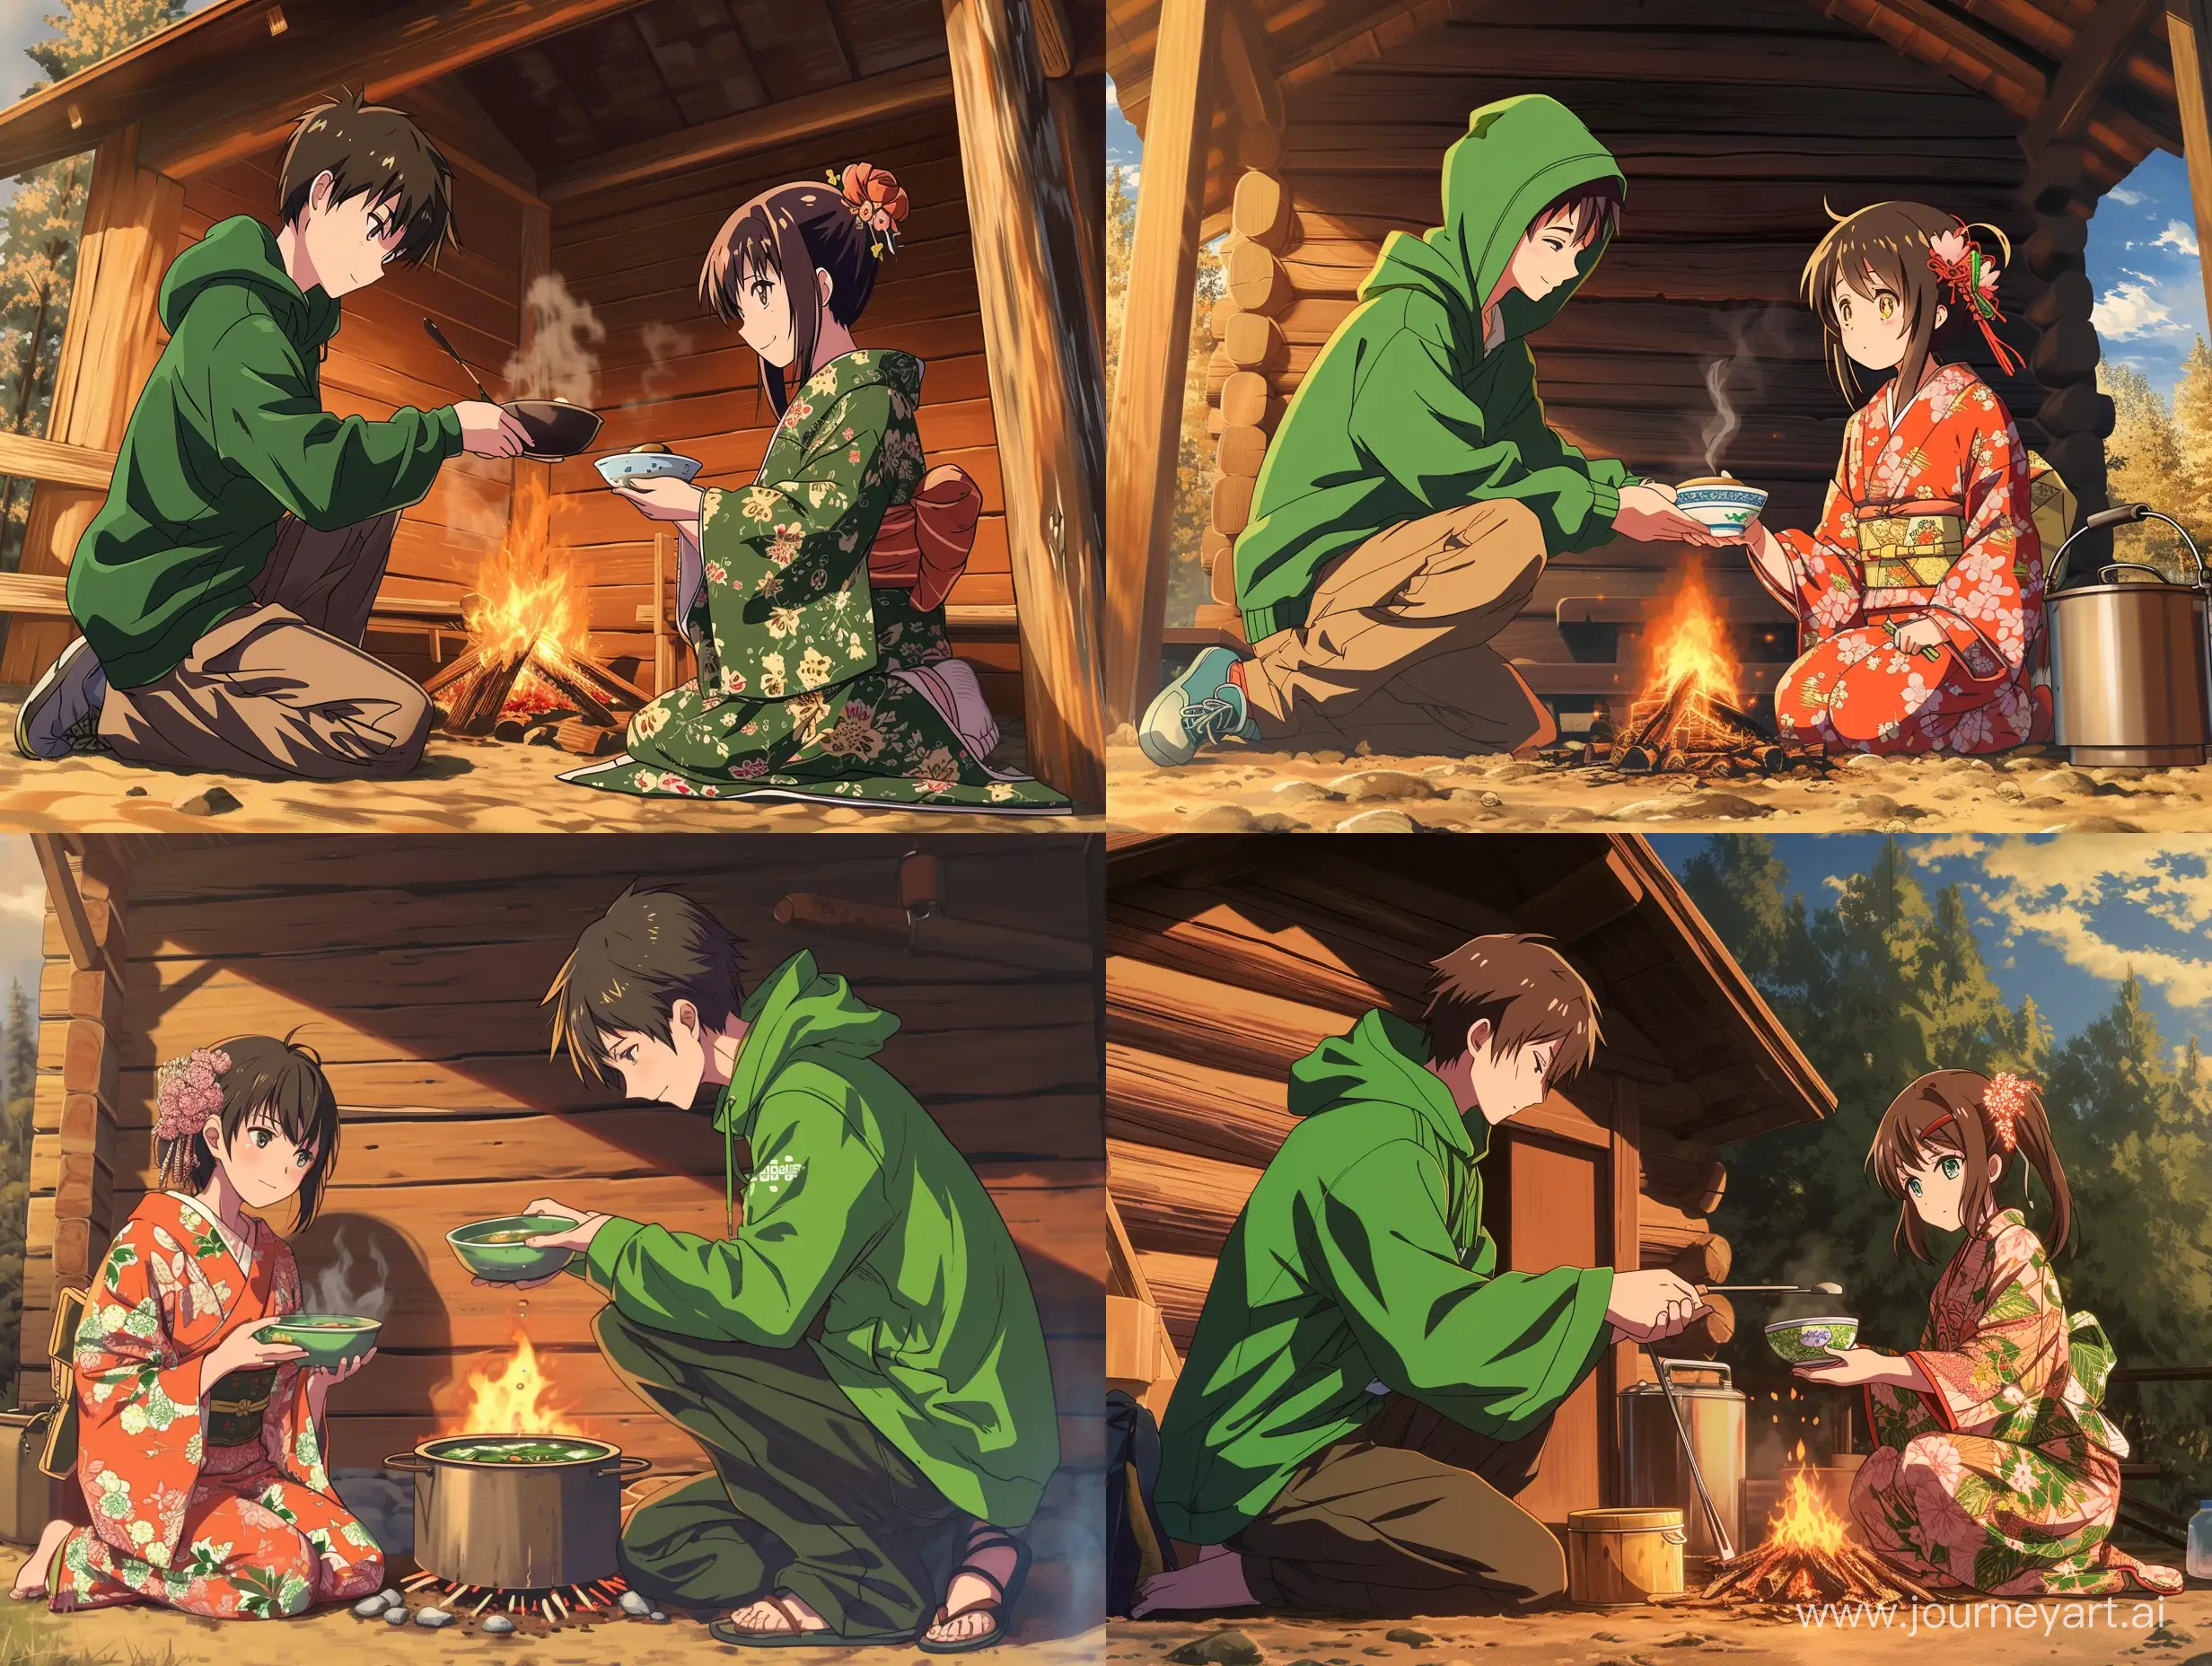 Cozy-Anime-Scene-Boy-in-Green-Hoodie-Sharing-Hotpot-with-Girl-in-Kimono